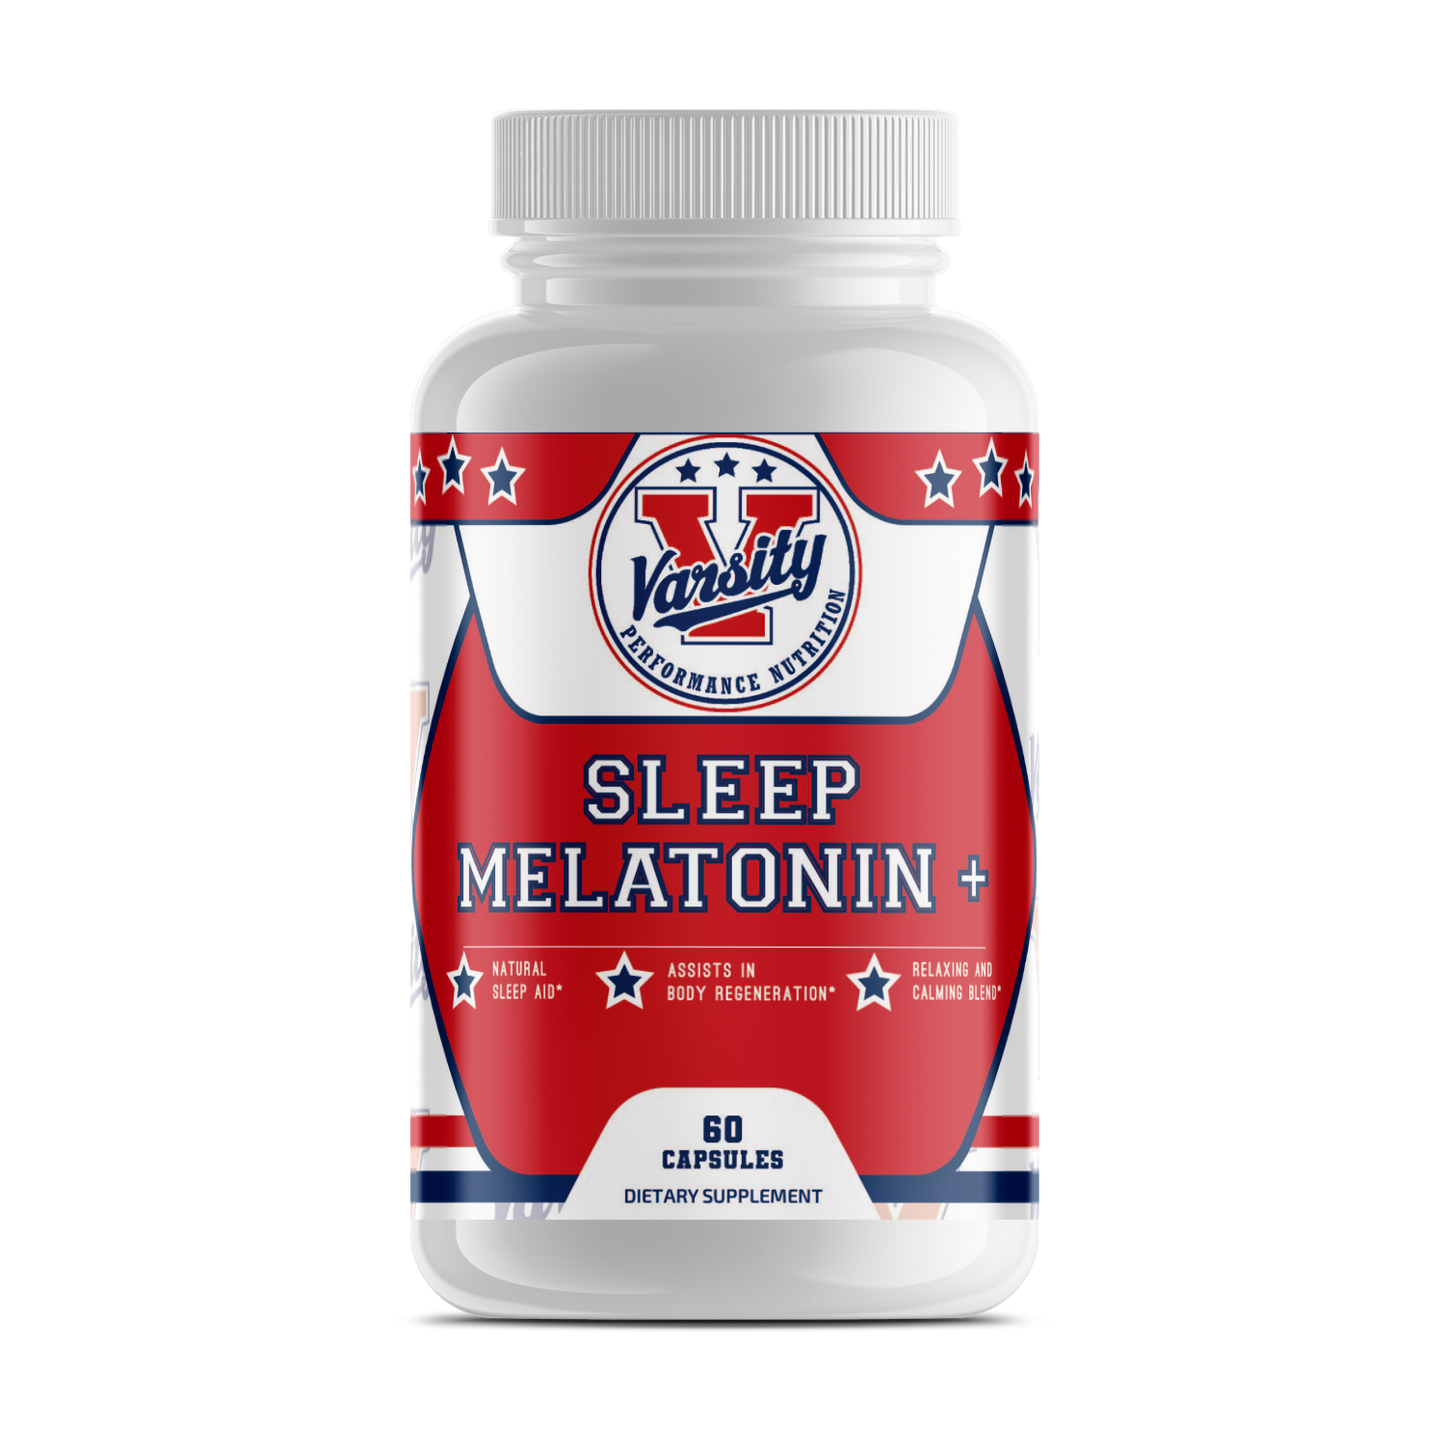 Sleep Melatonin +